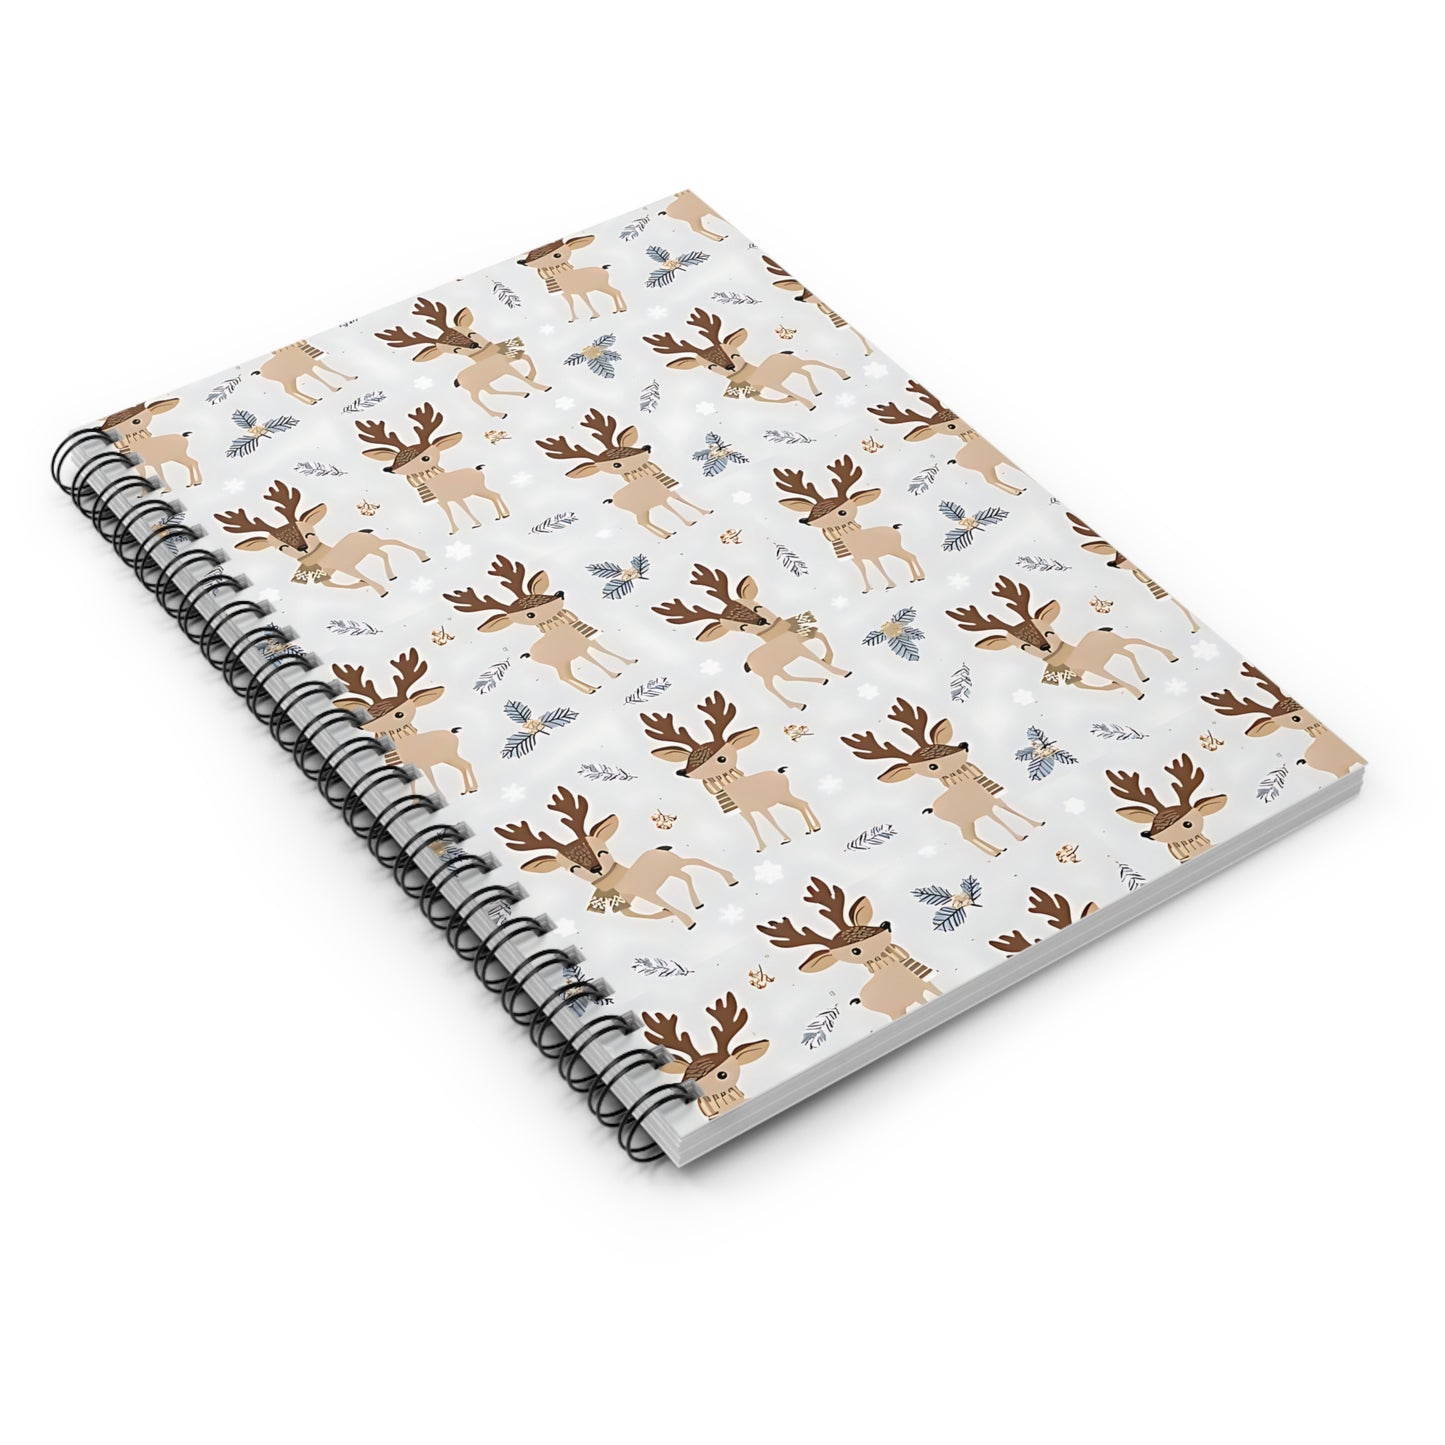 Reindeer Spiral Notebook - Ruled Line